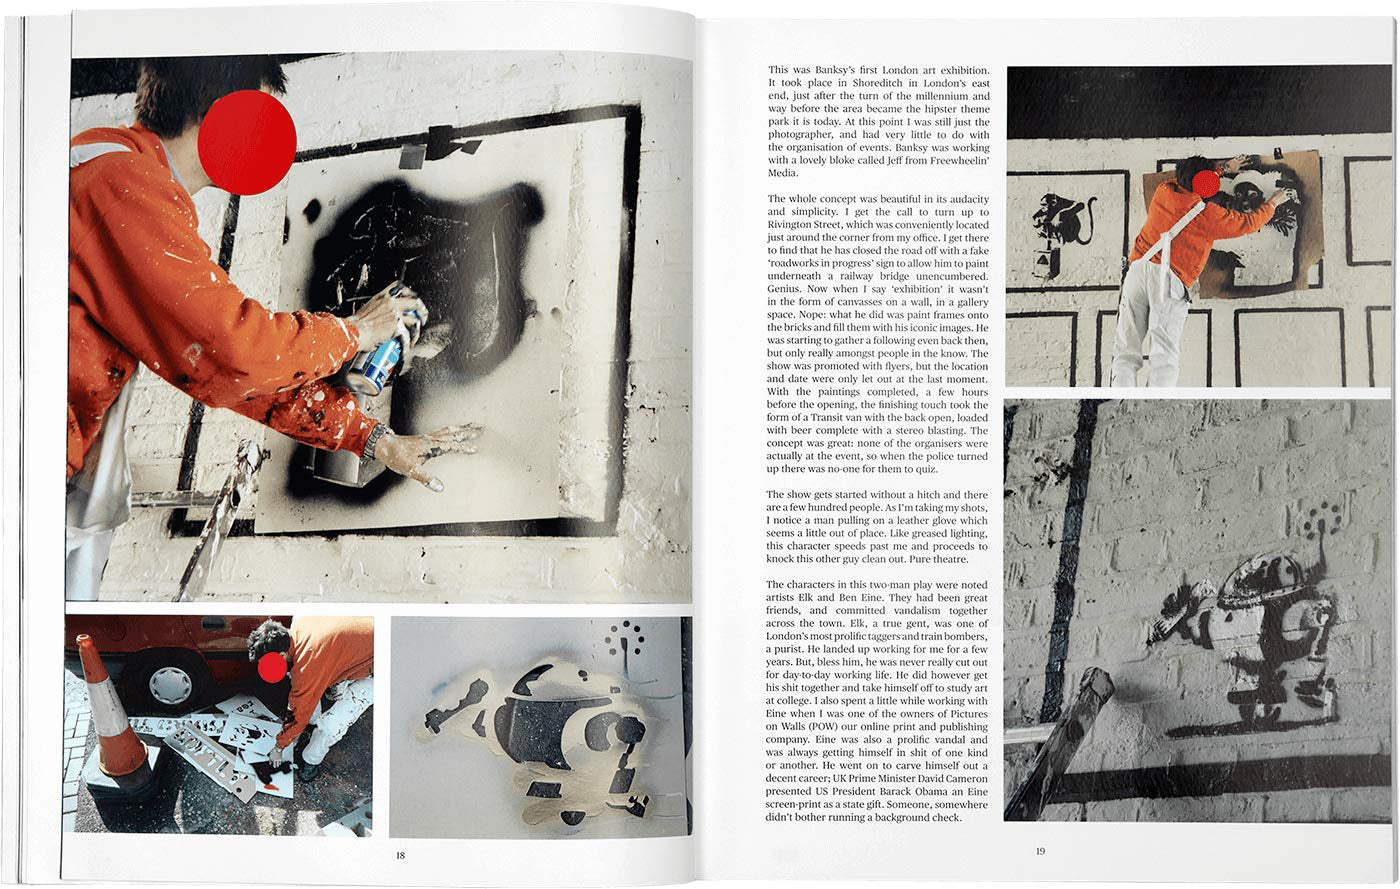 Banksy Captured - 1st Edition Book - by Steve Lazarides